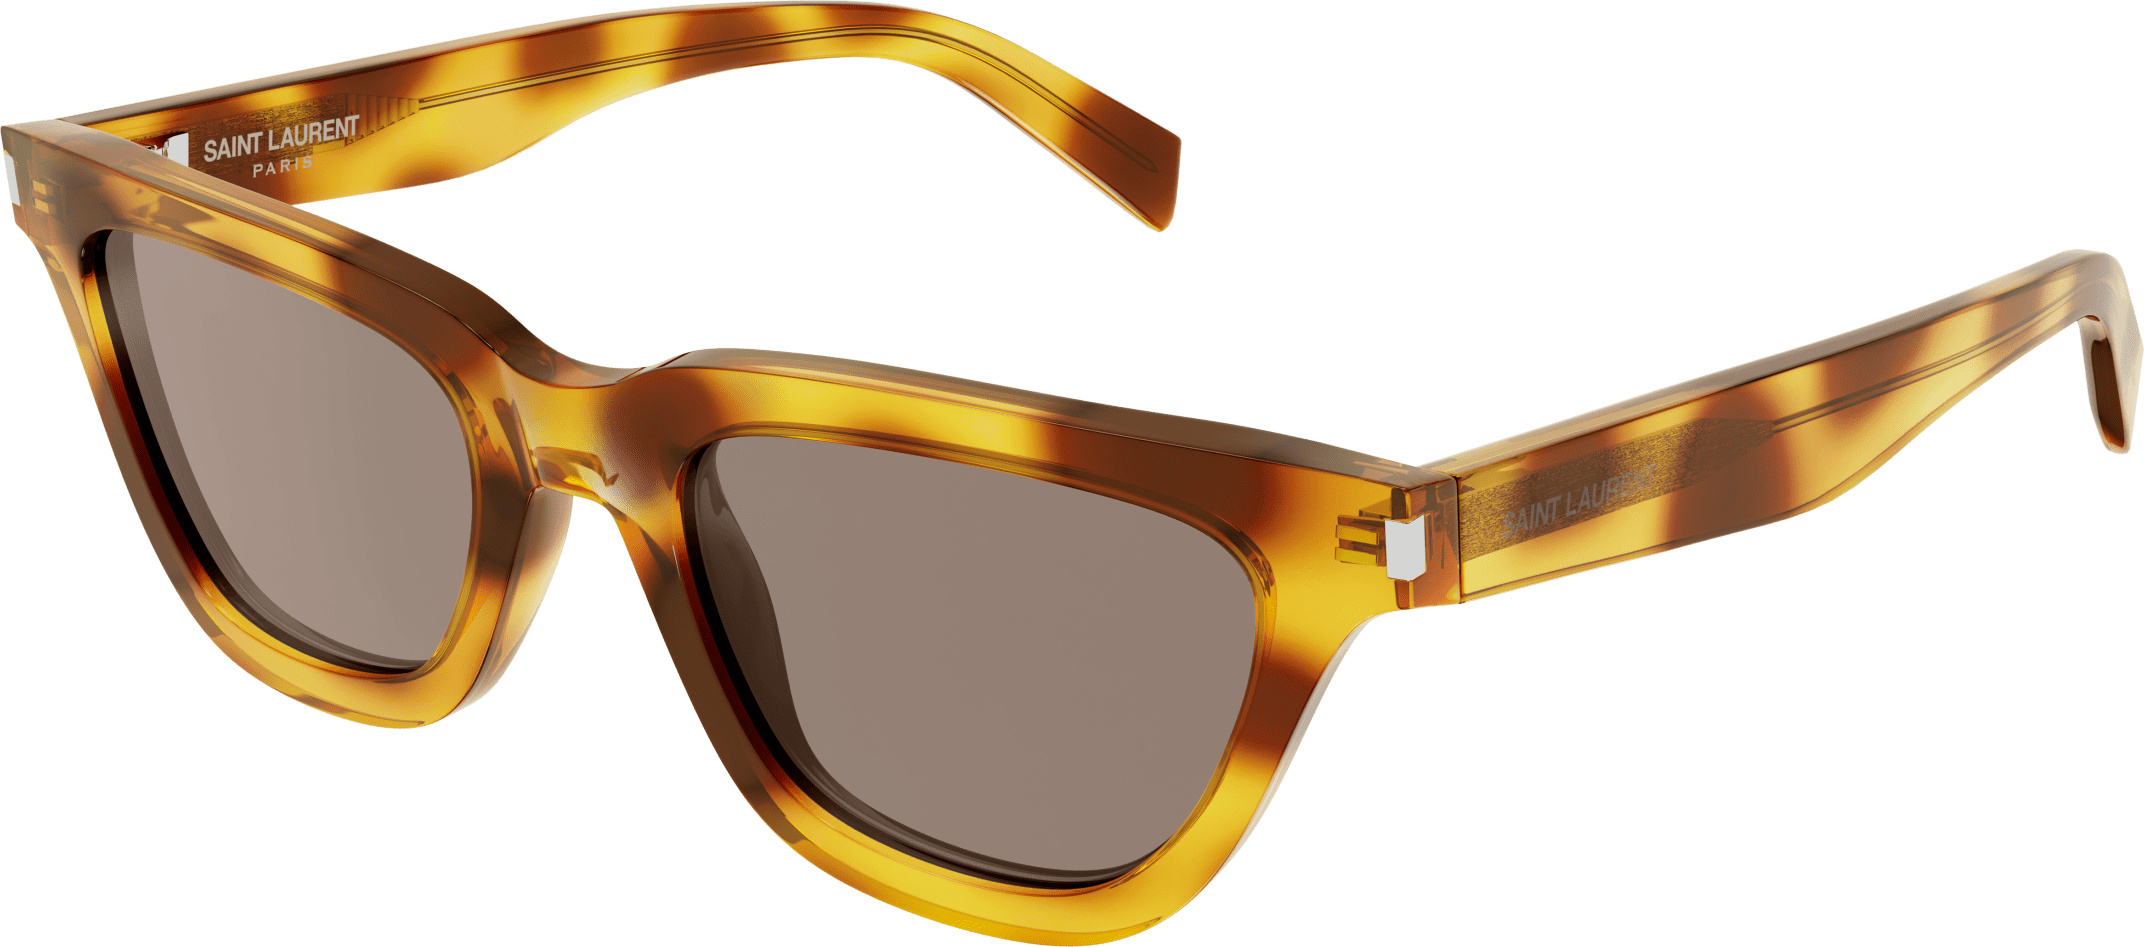 Saint Laurent Sunglasses SL 462 SULPICE 004 Dark Havana Yellow 